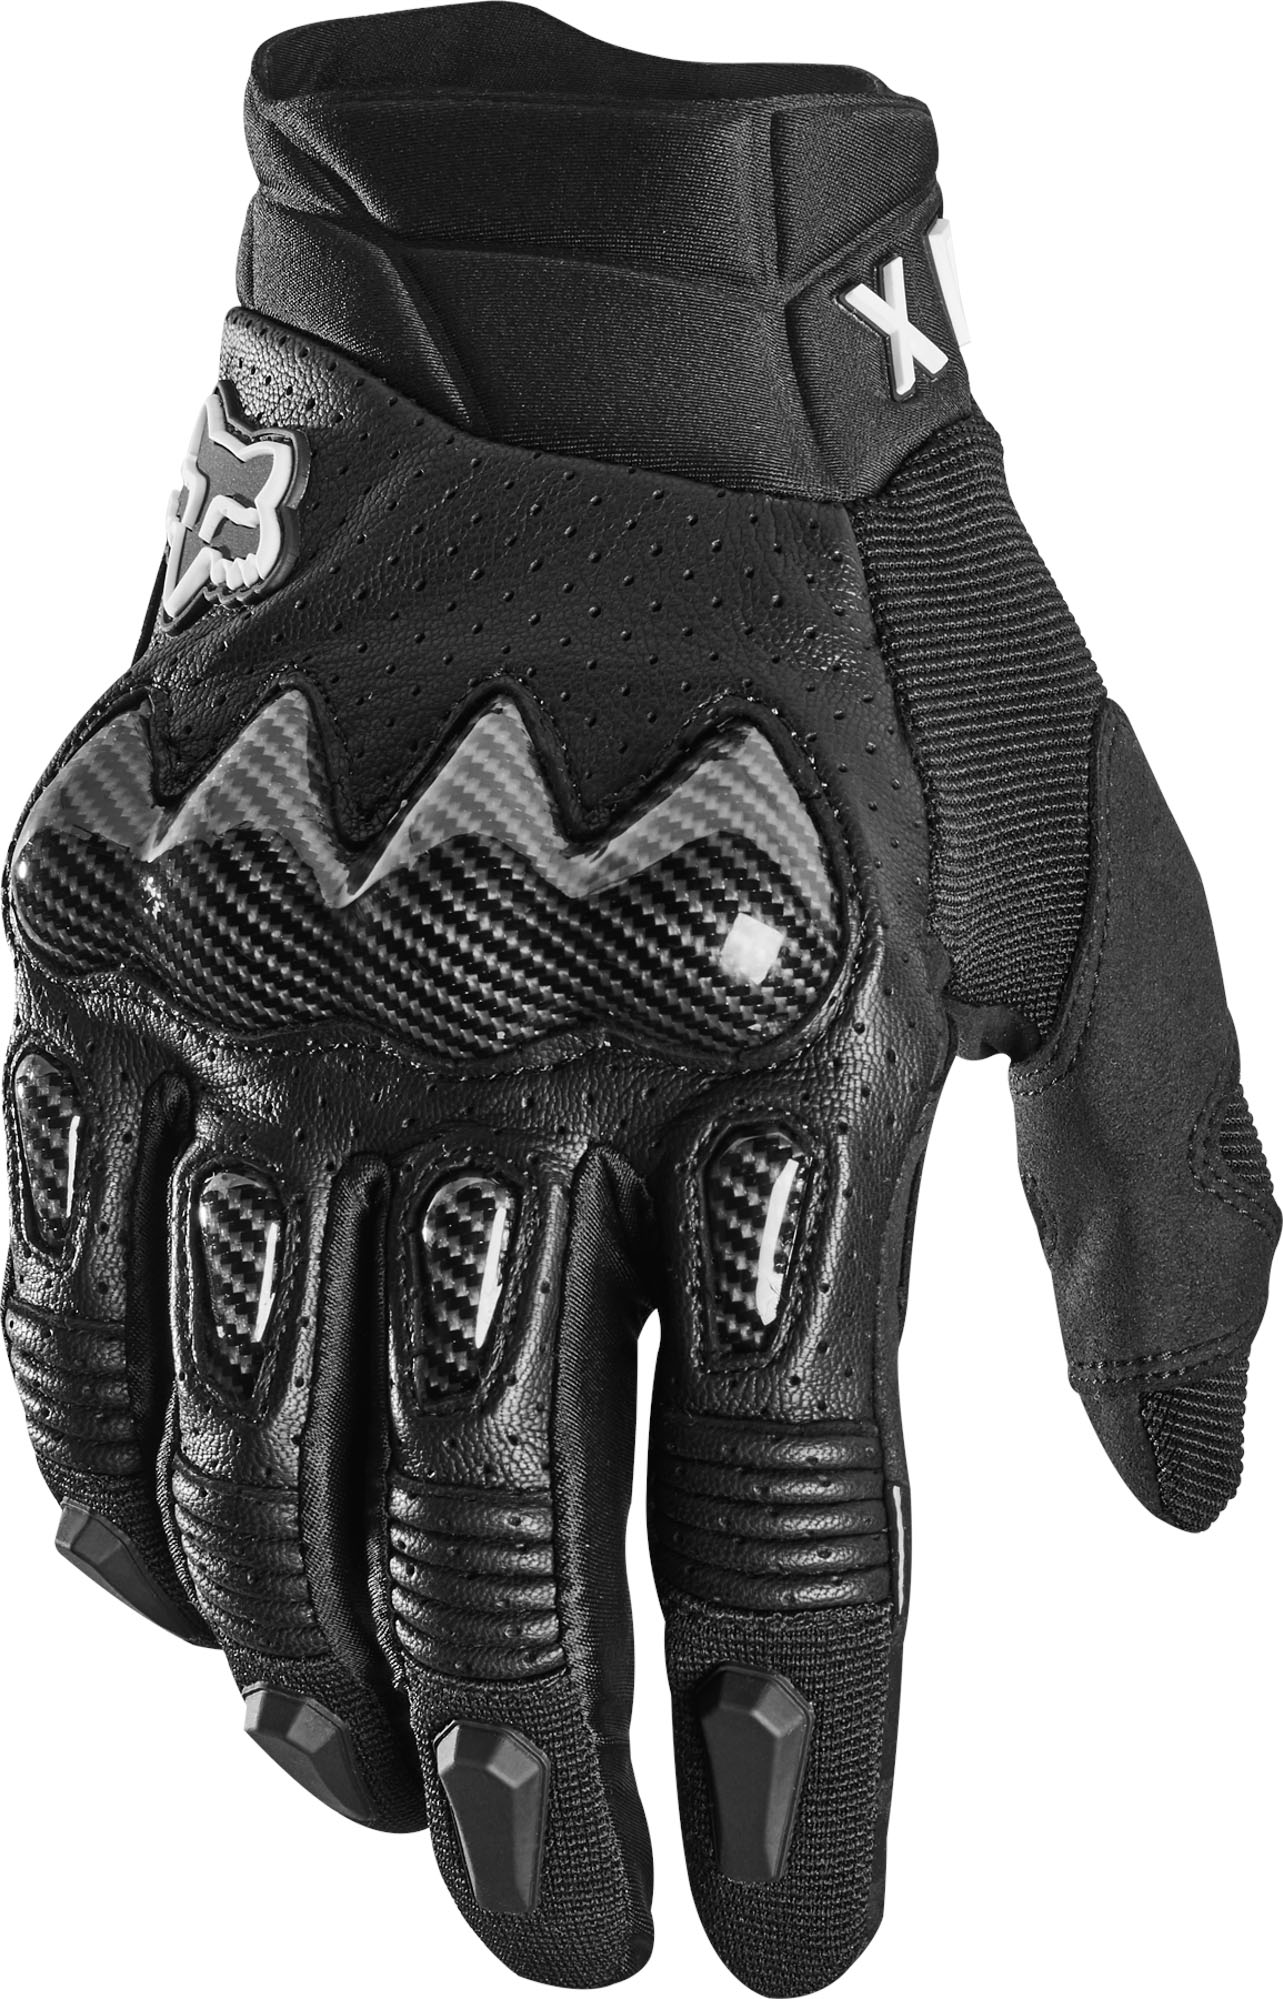 FOX Bomber Glove Ce - 4XL, Black MX22